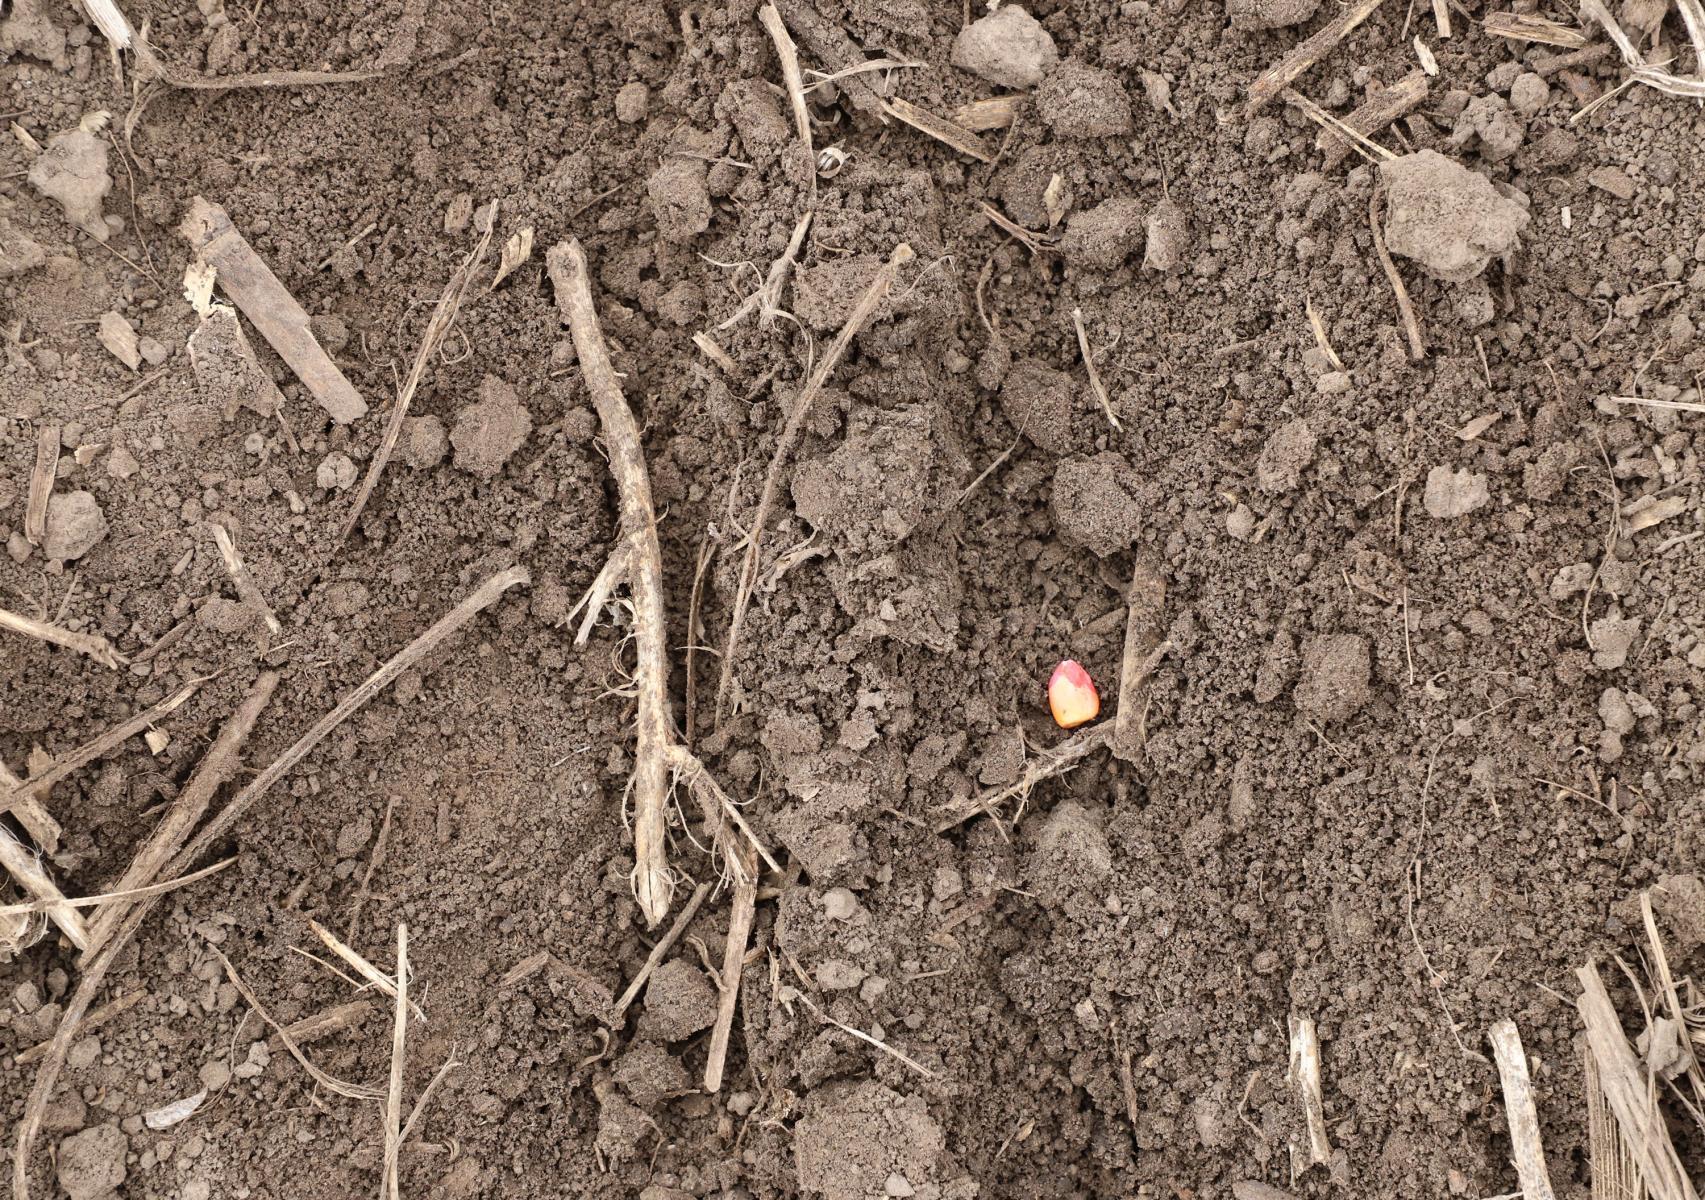 Corn seed on ground